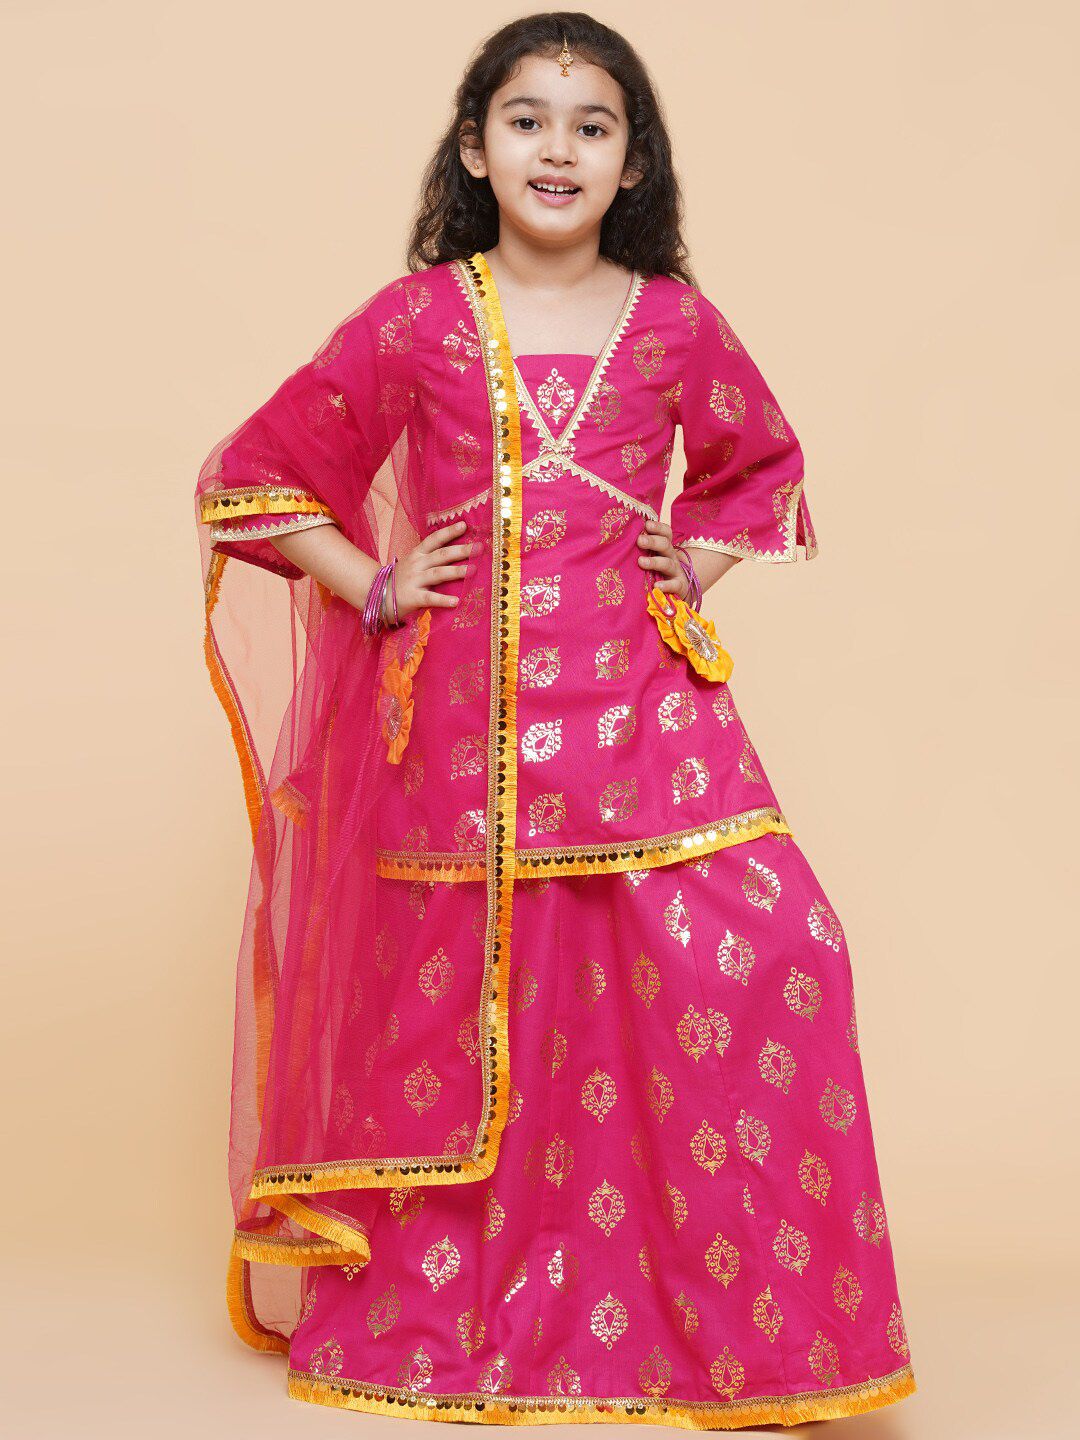 Bitiya by Bhama Girls Printed Ready to Wear Lehenga & Blouse With Dupatta Price in India